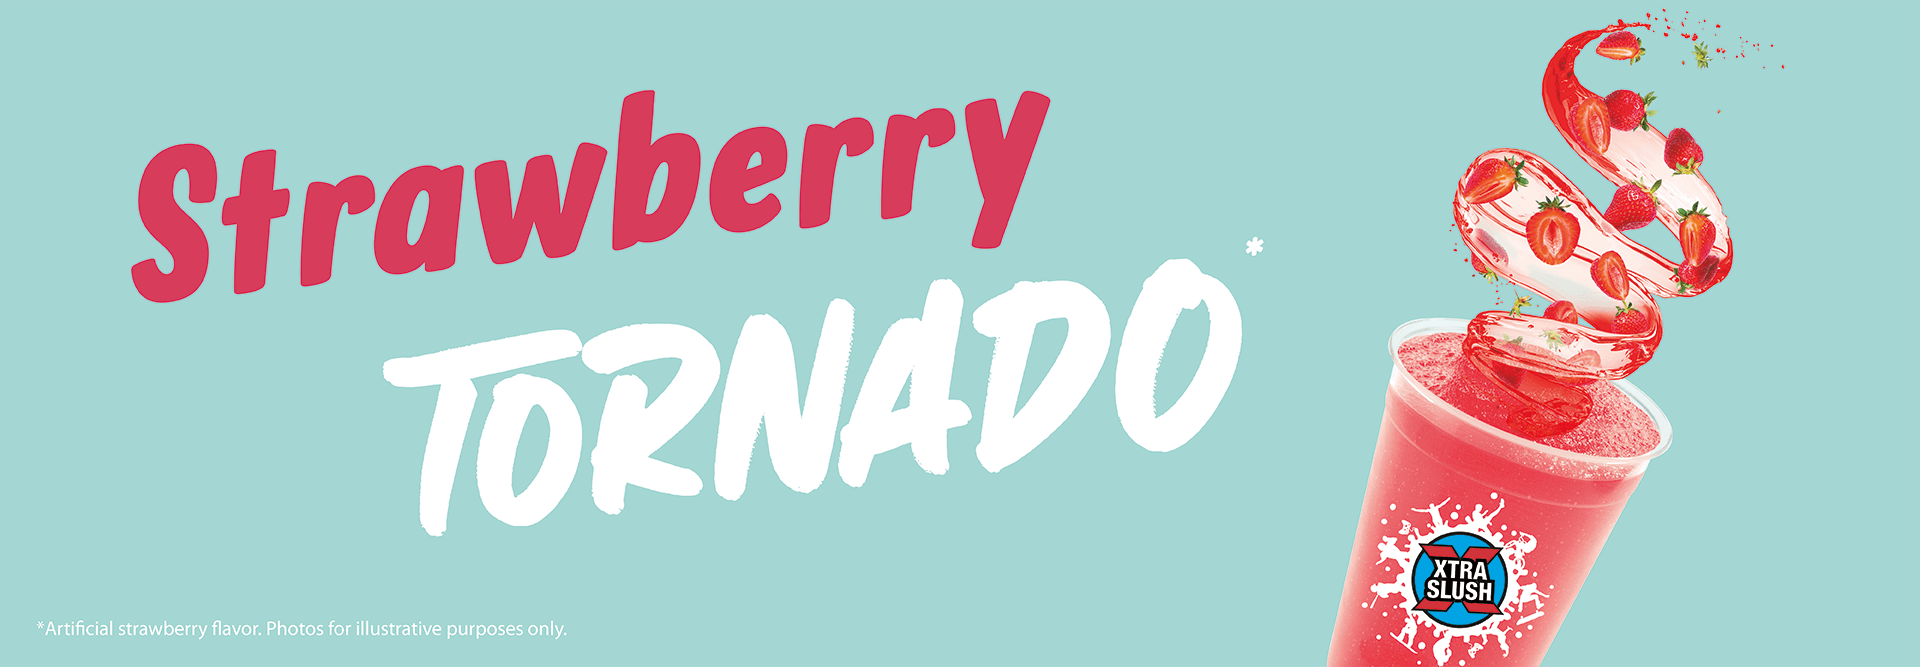 Strawberry Tornado